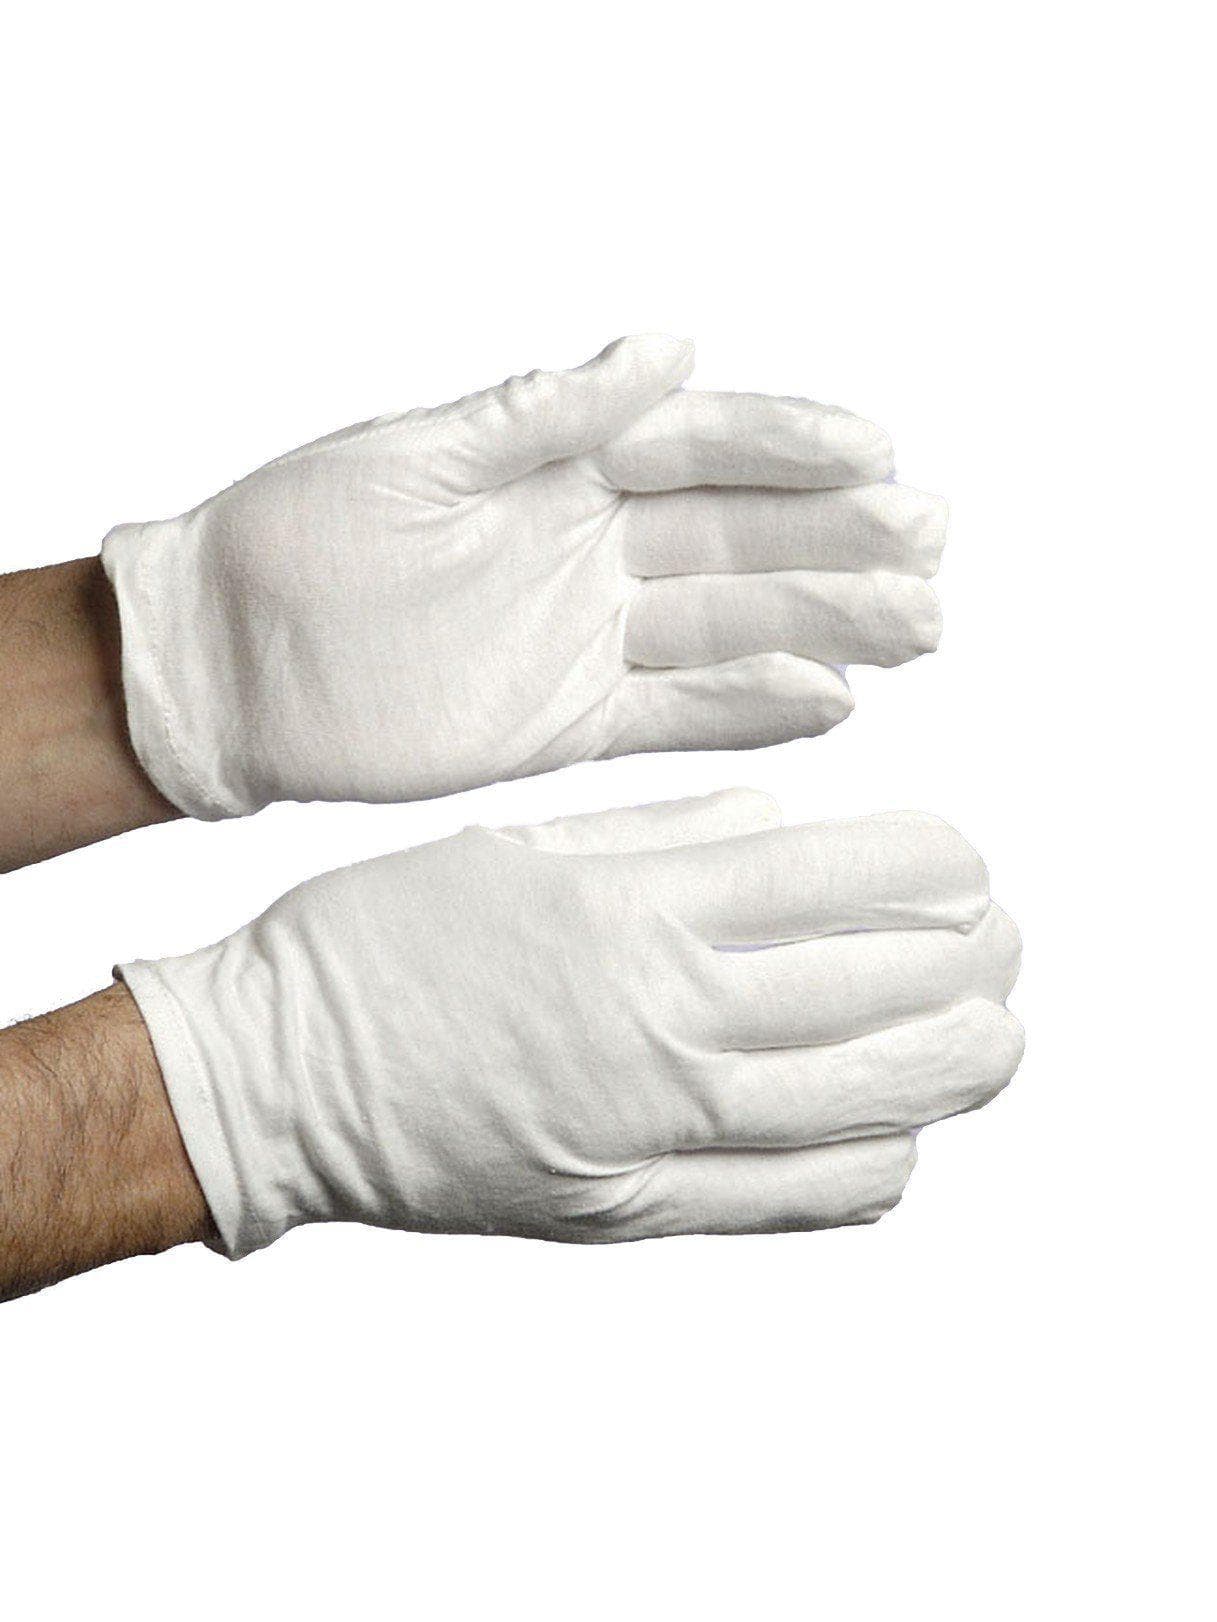 Adult White Cotton Clown Gloves - costumes.com